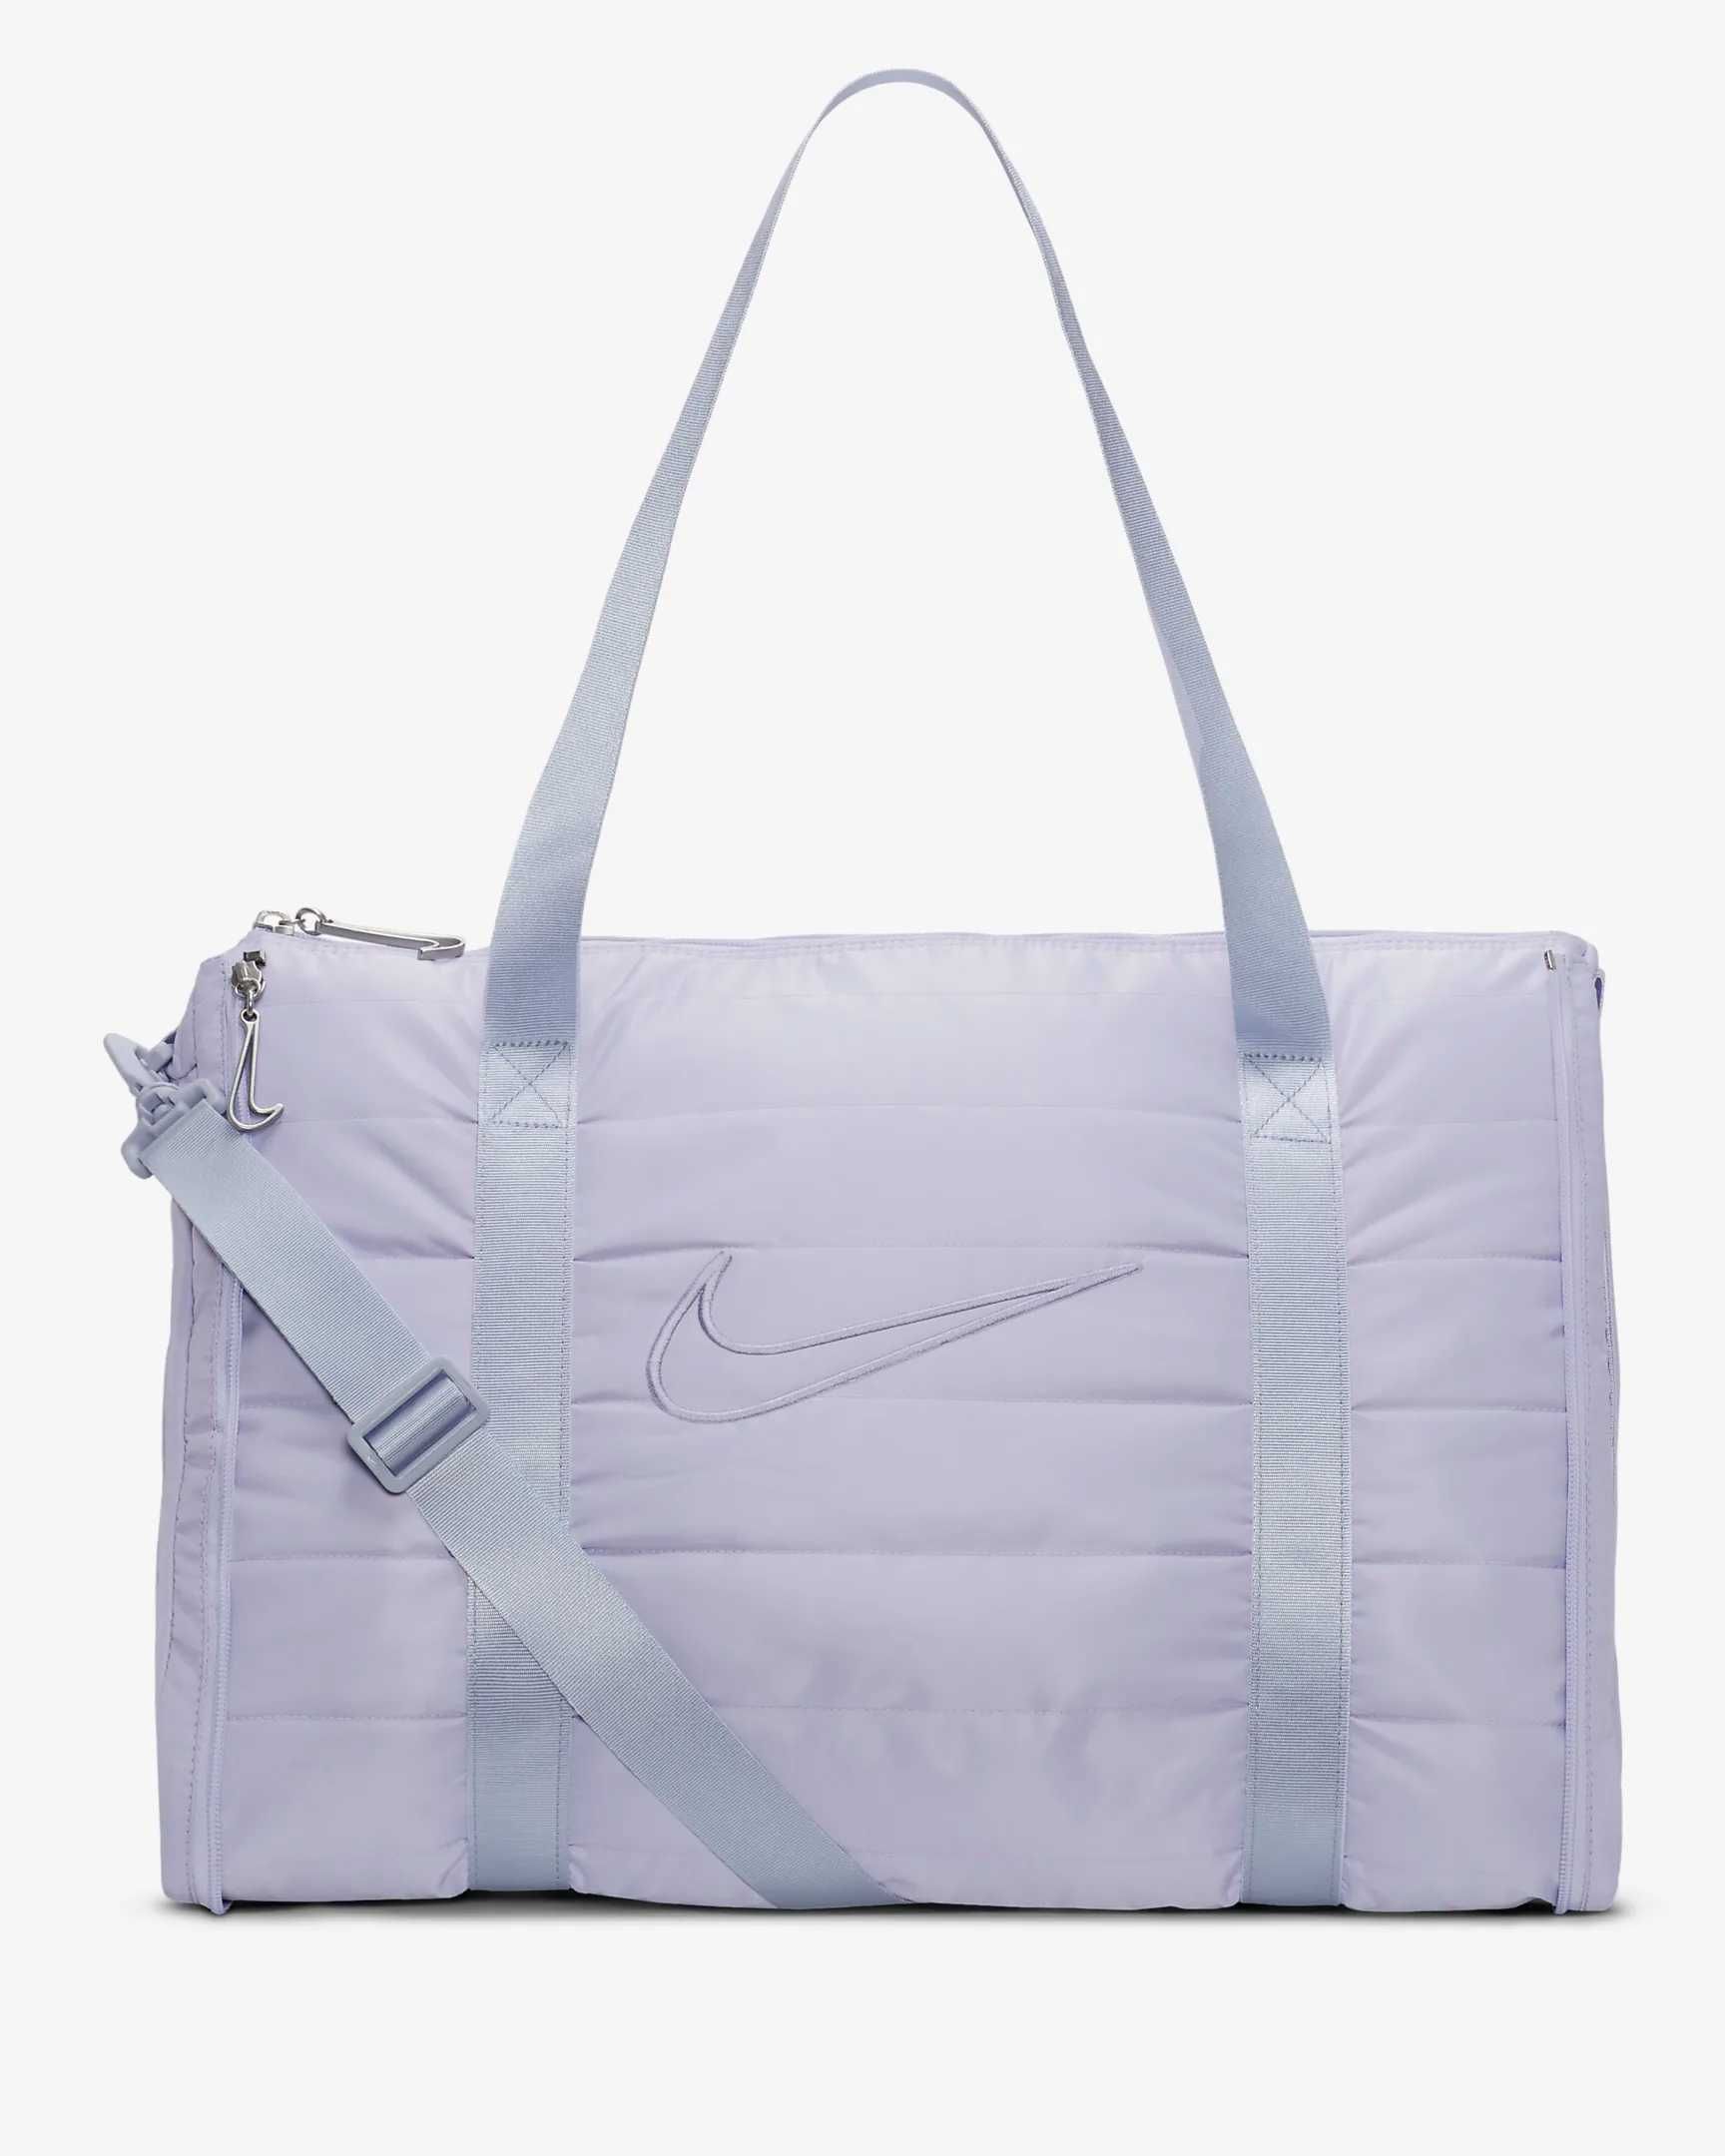 Serena Williams Design Crew
Duffel Bag (35L)